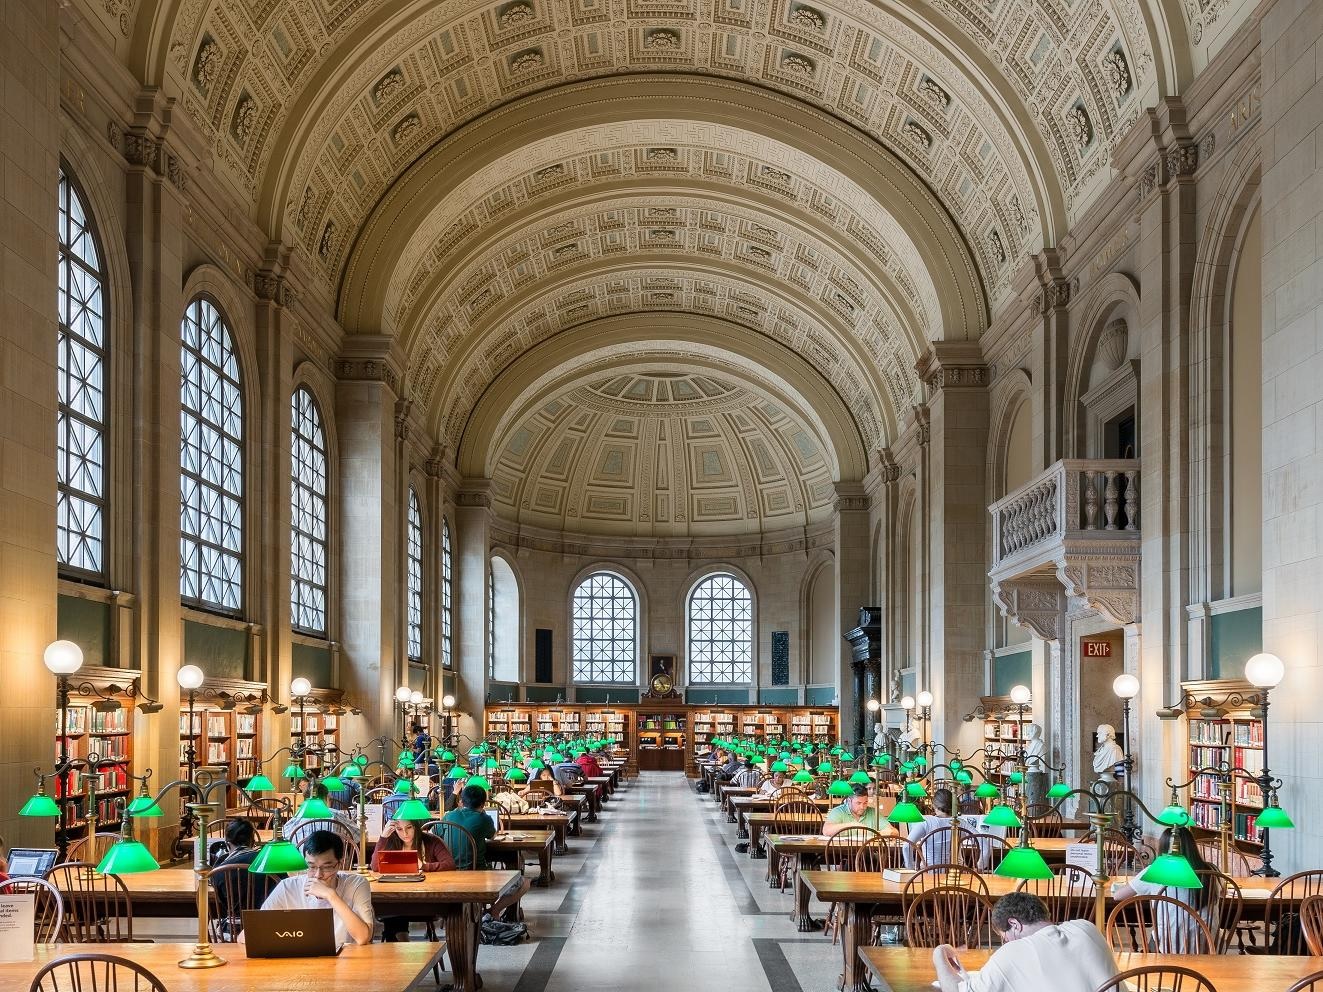 Boston public library 02.jpg